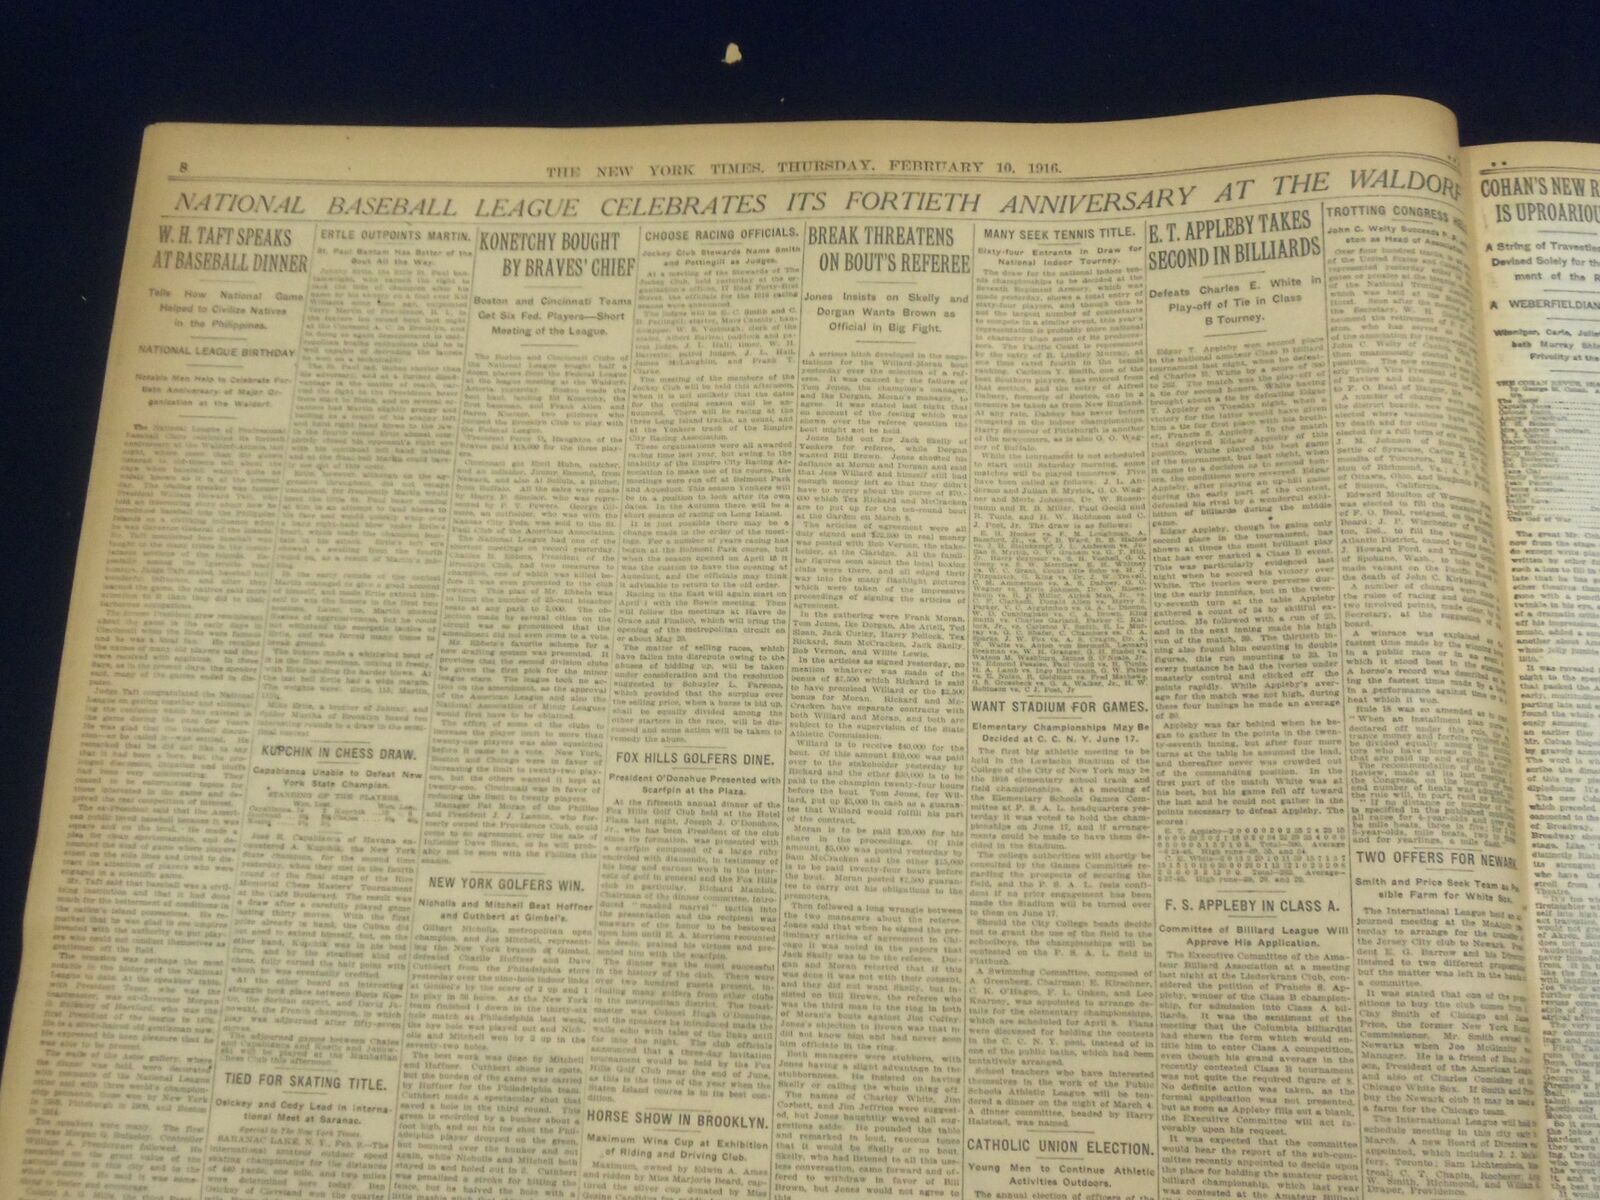 1916 FEB 10 NEW YORK TIMES - NATIONAL BASEBALL LEAGUE 40TH ANNIVERSARY- NT 9031